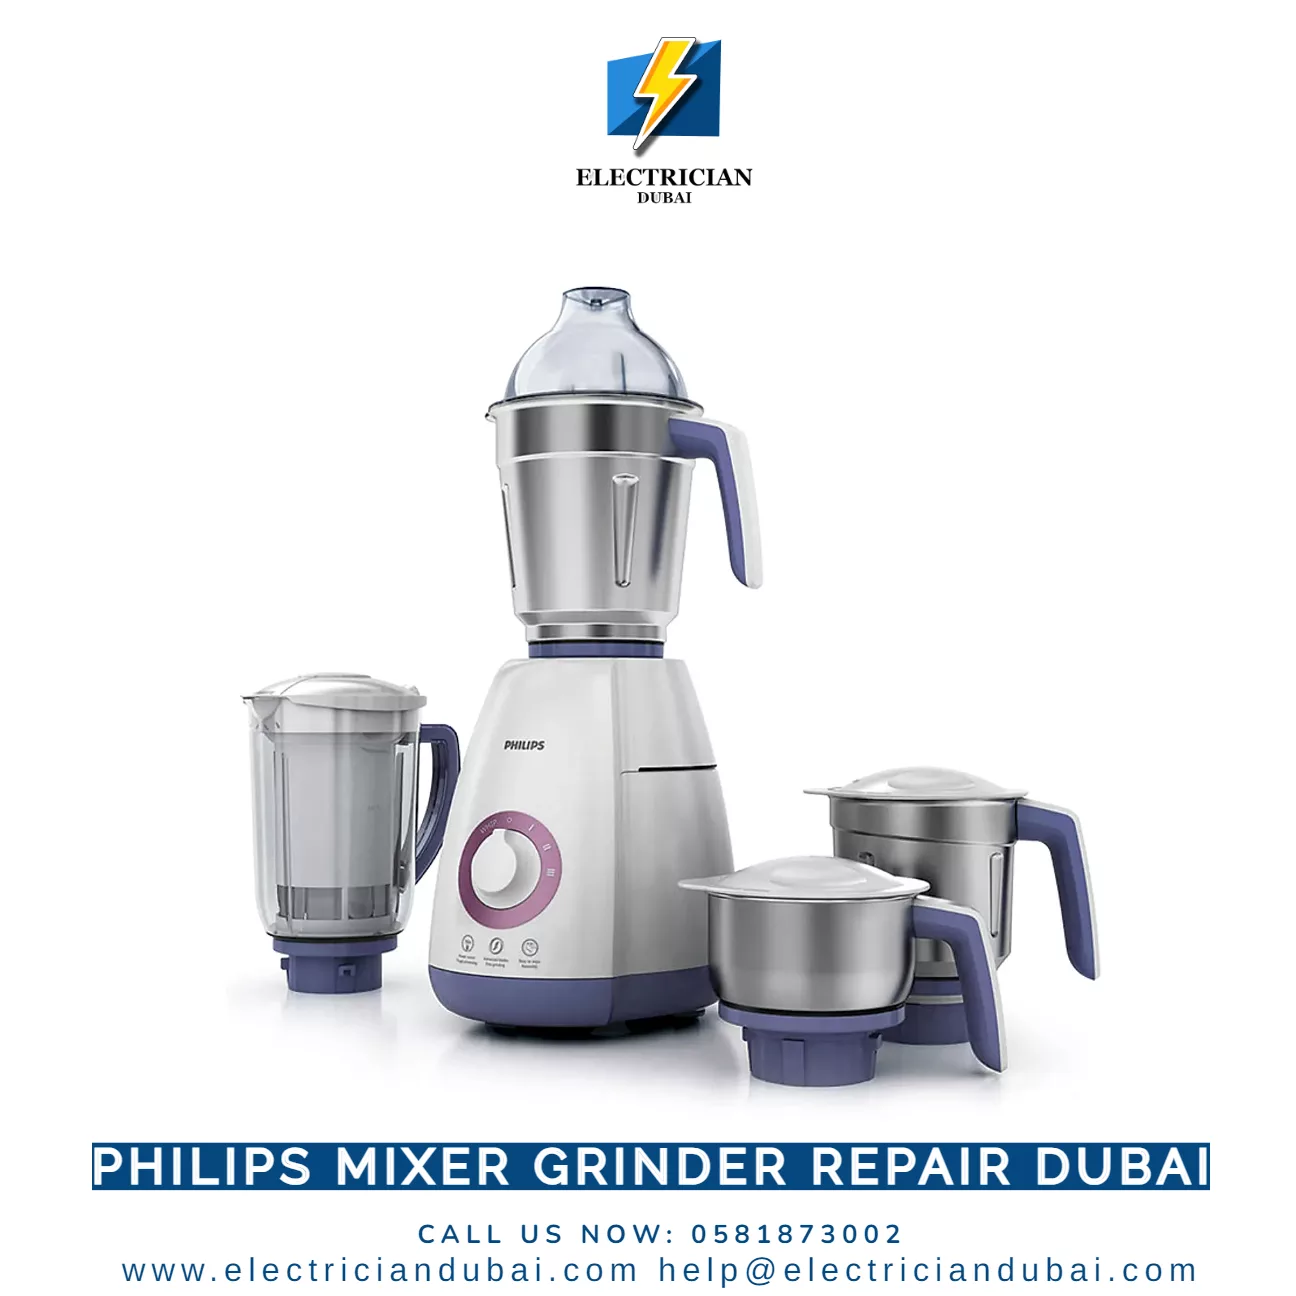 Philips Mixer Grinder Repair Dubai